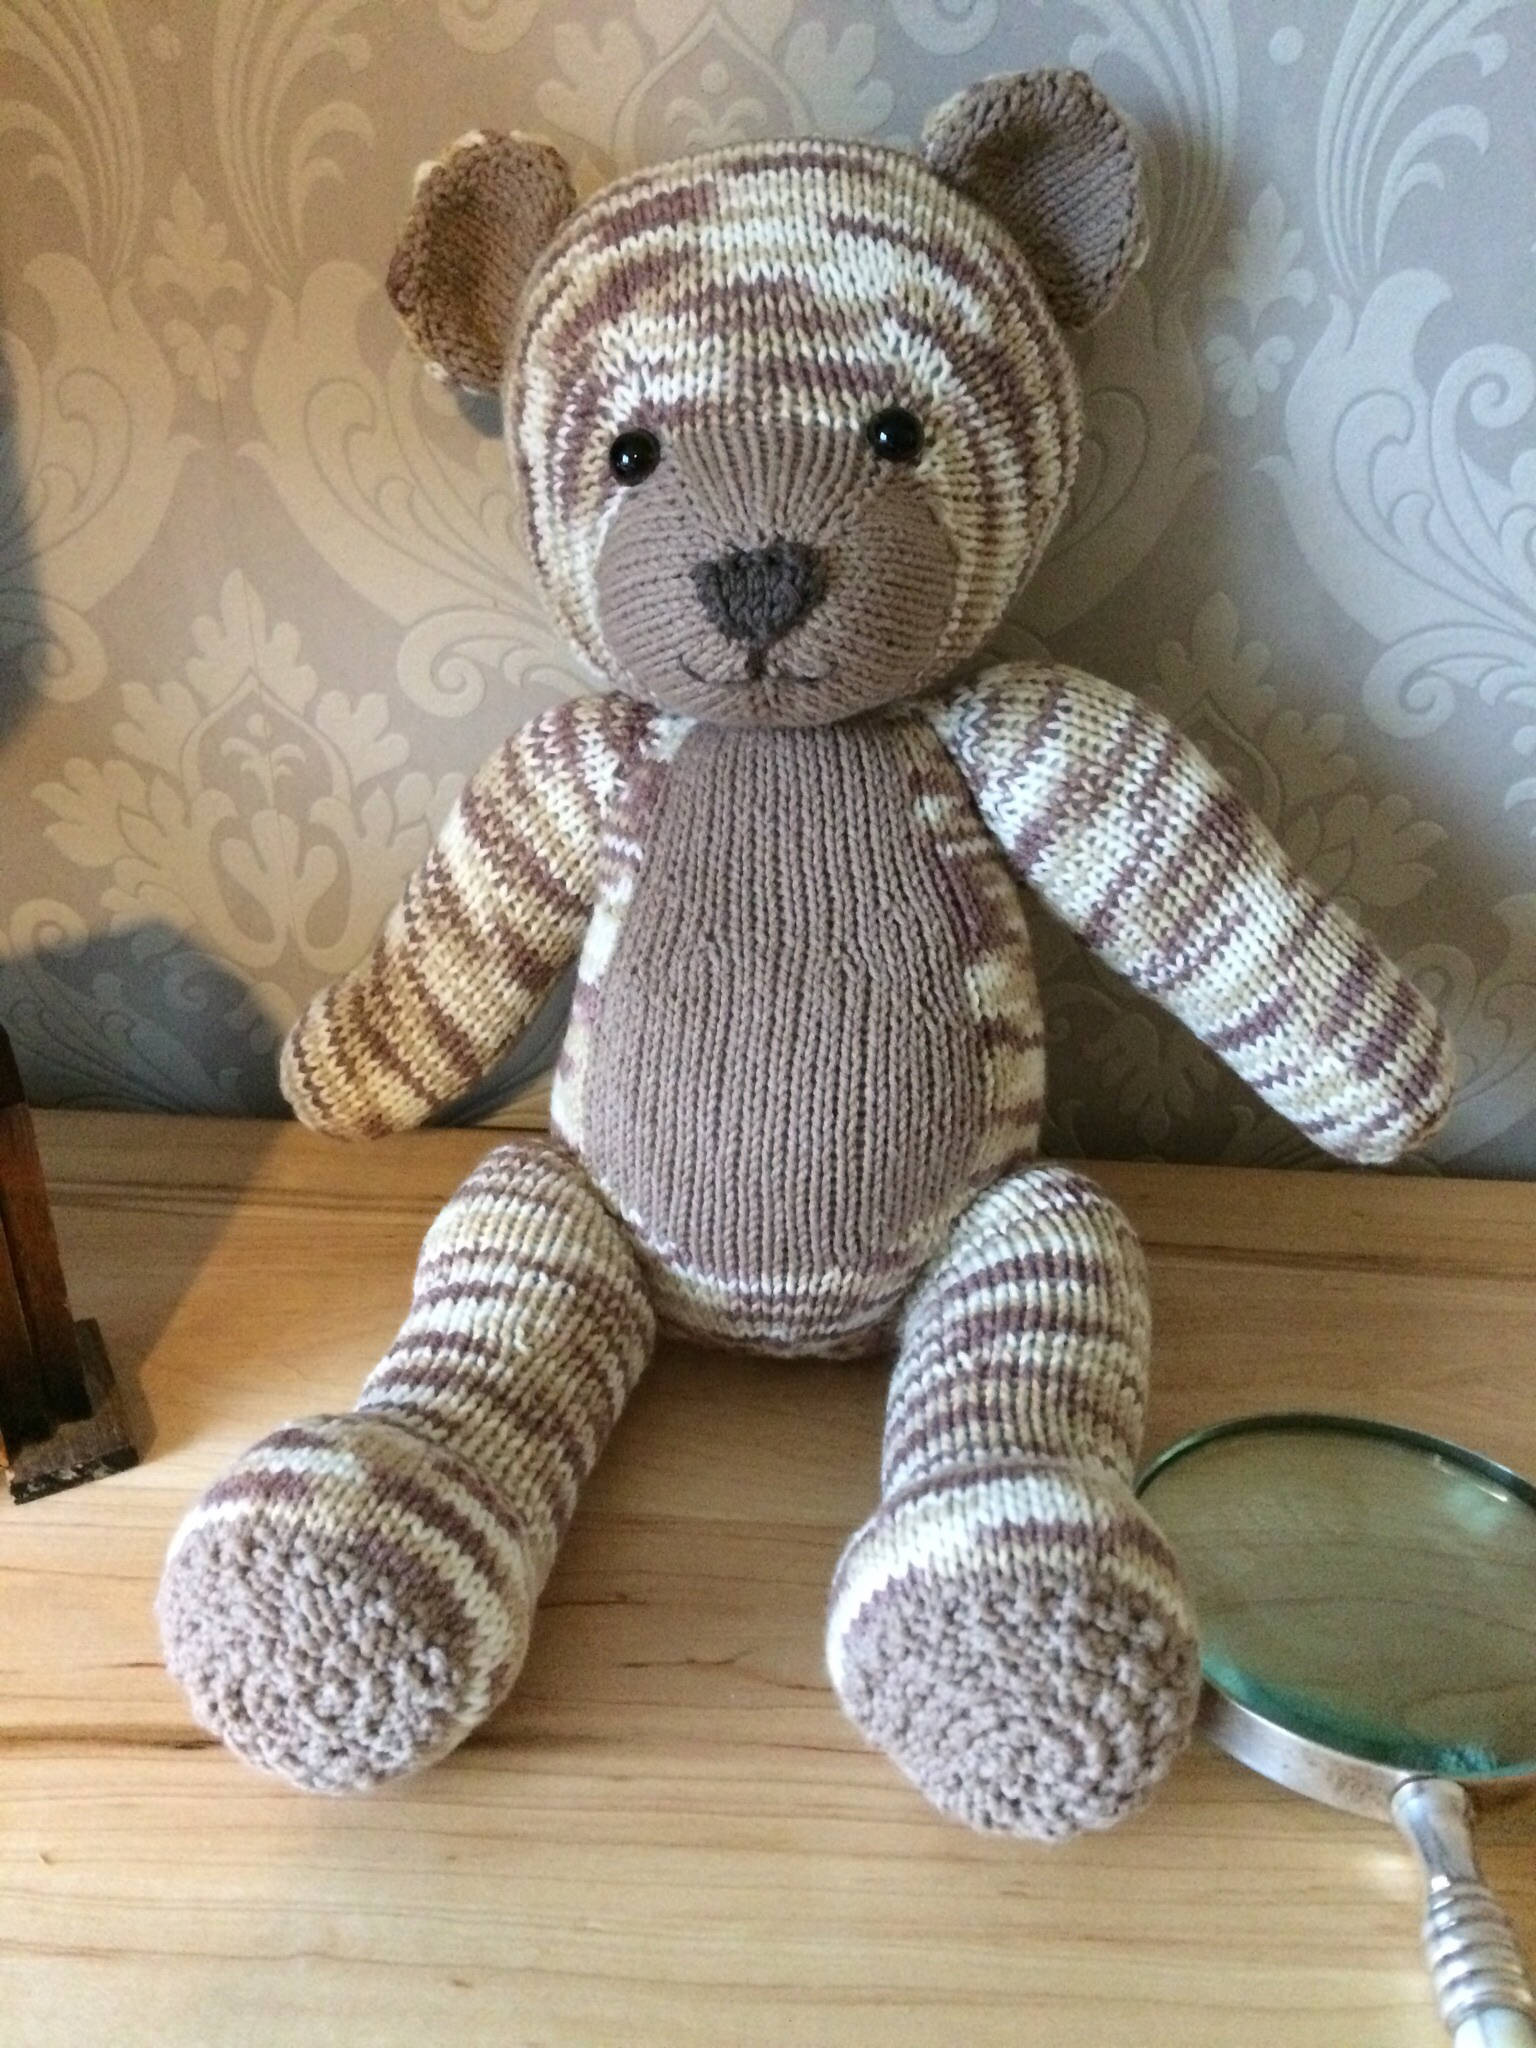 Knitables teddy bear knitting project by Susy J | LoveKnitting